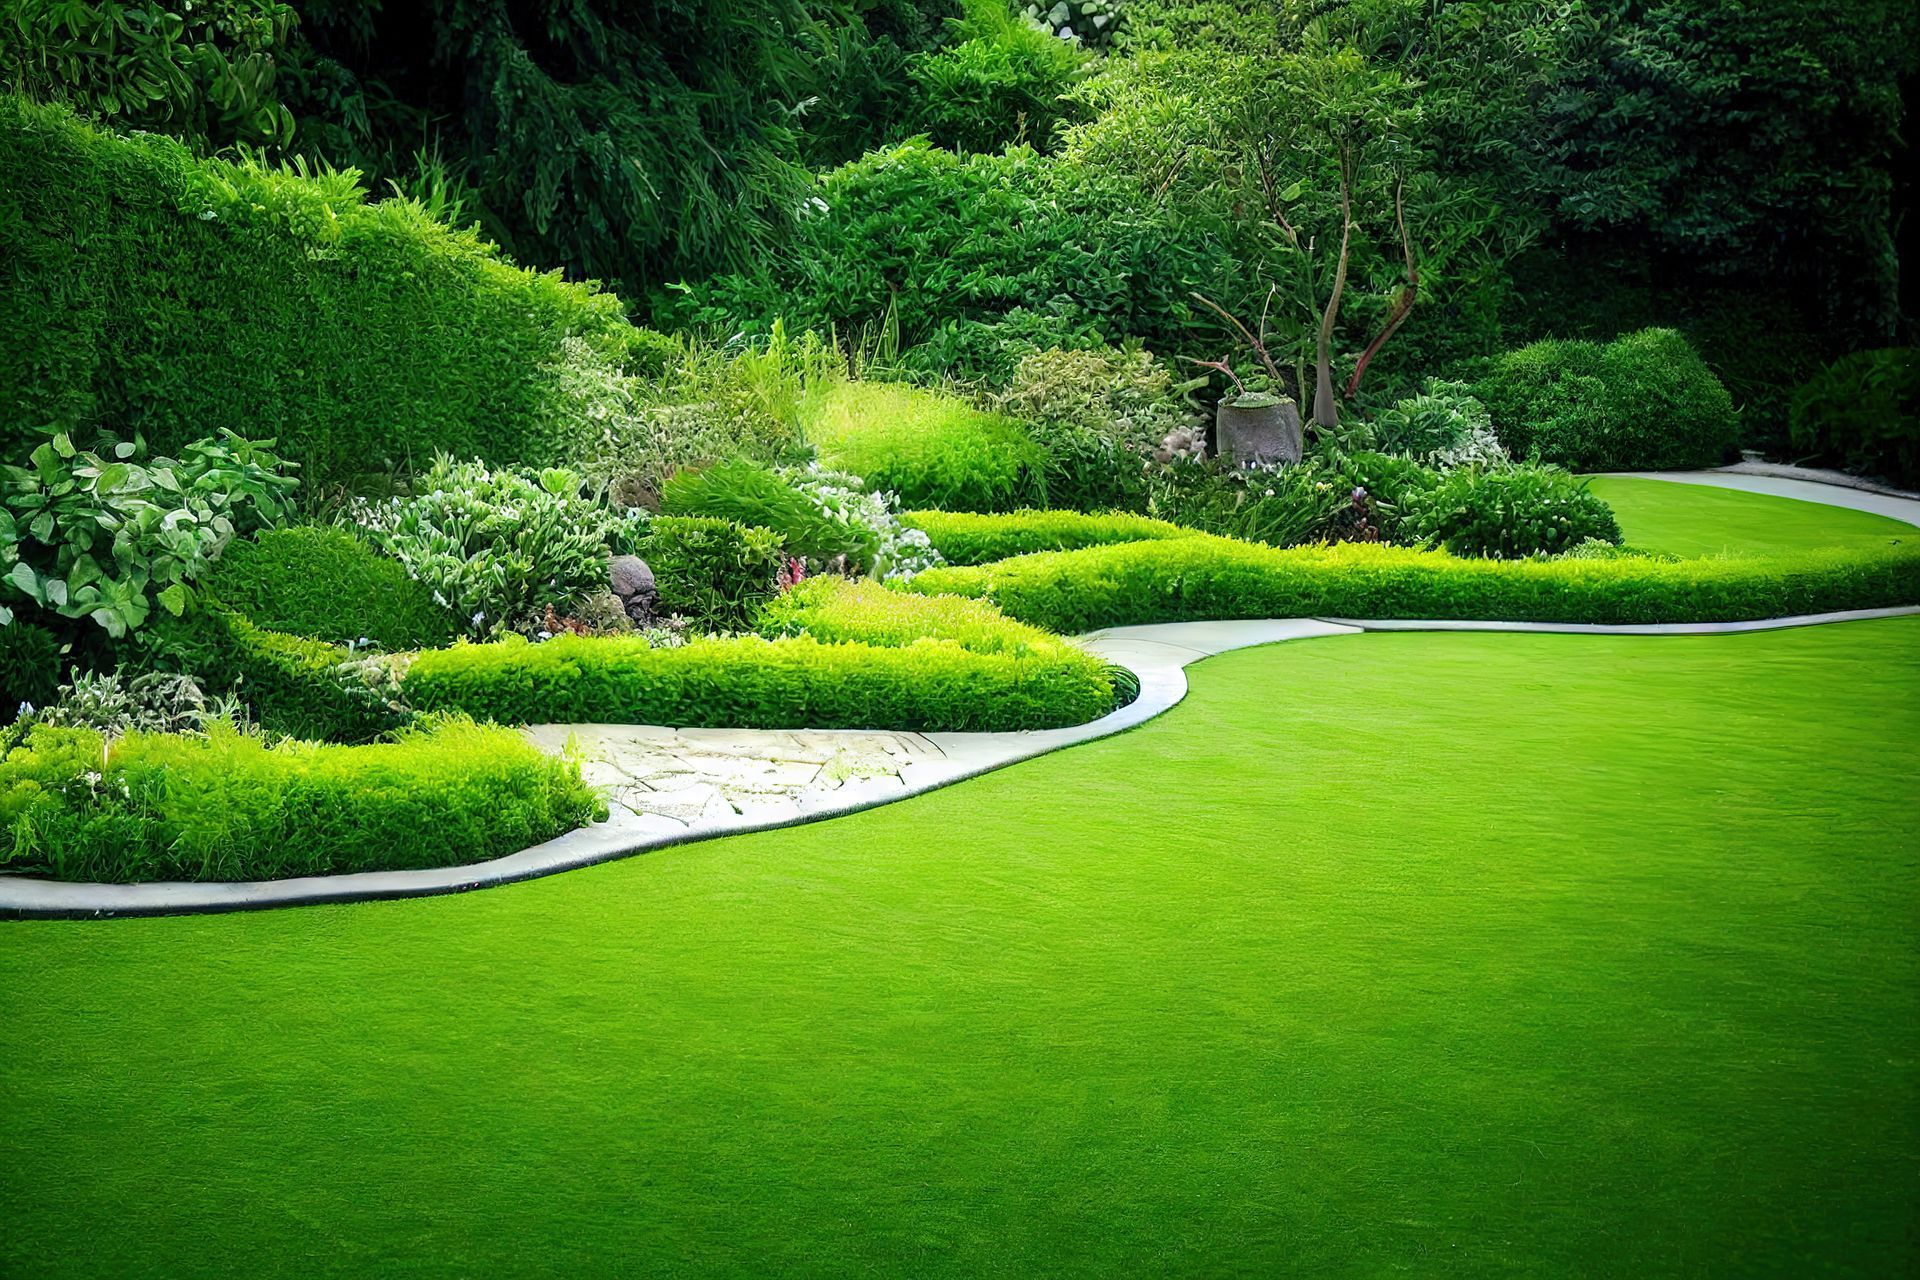 a lush green garden with a path going through it